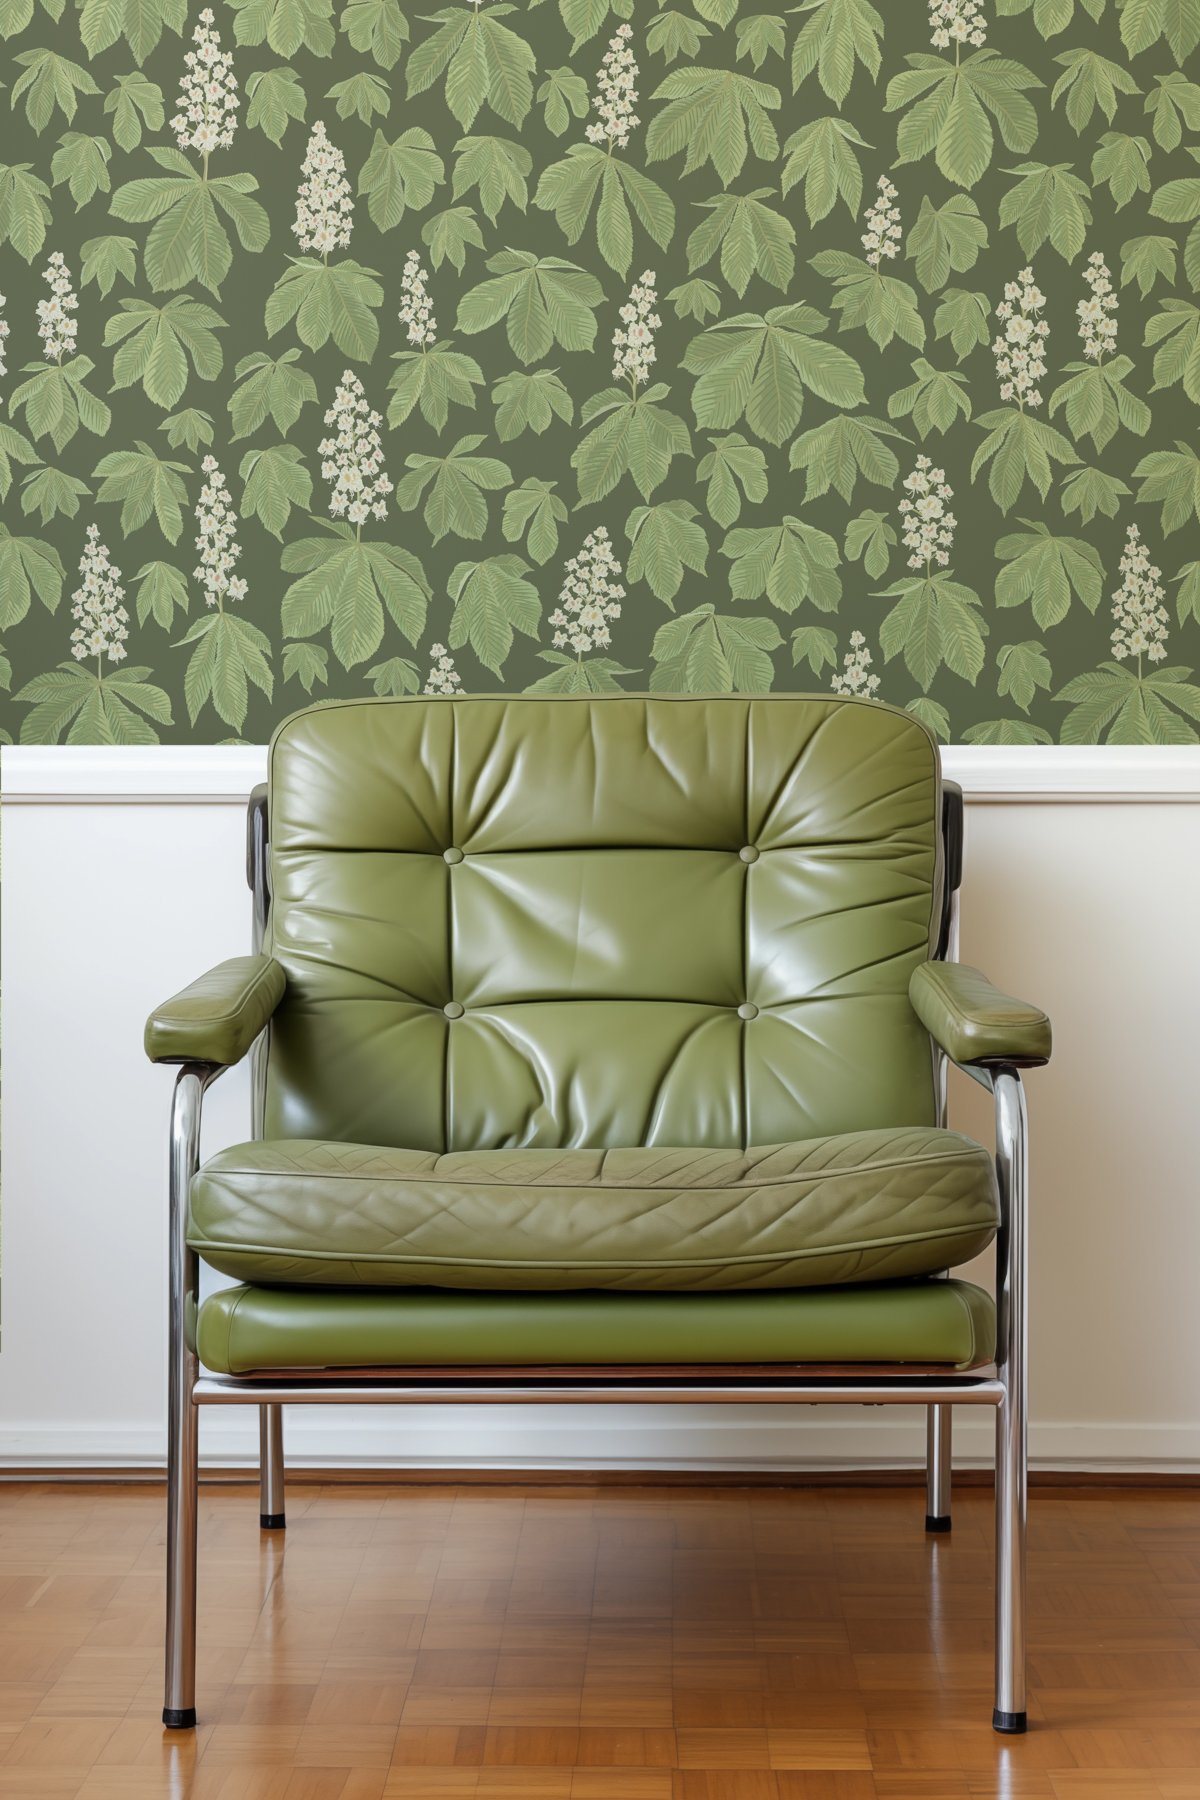 Kate Golding Horse Chestnut Blossom (Green) Wallpaper.  Modern wallcoverings and interior decor.  